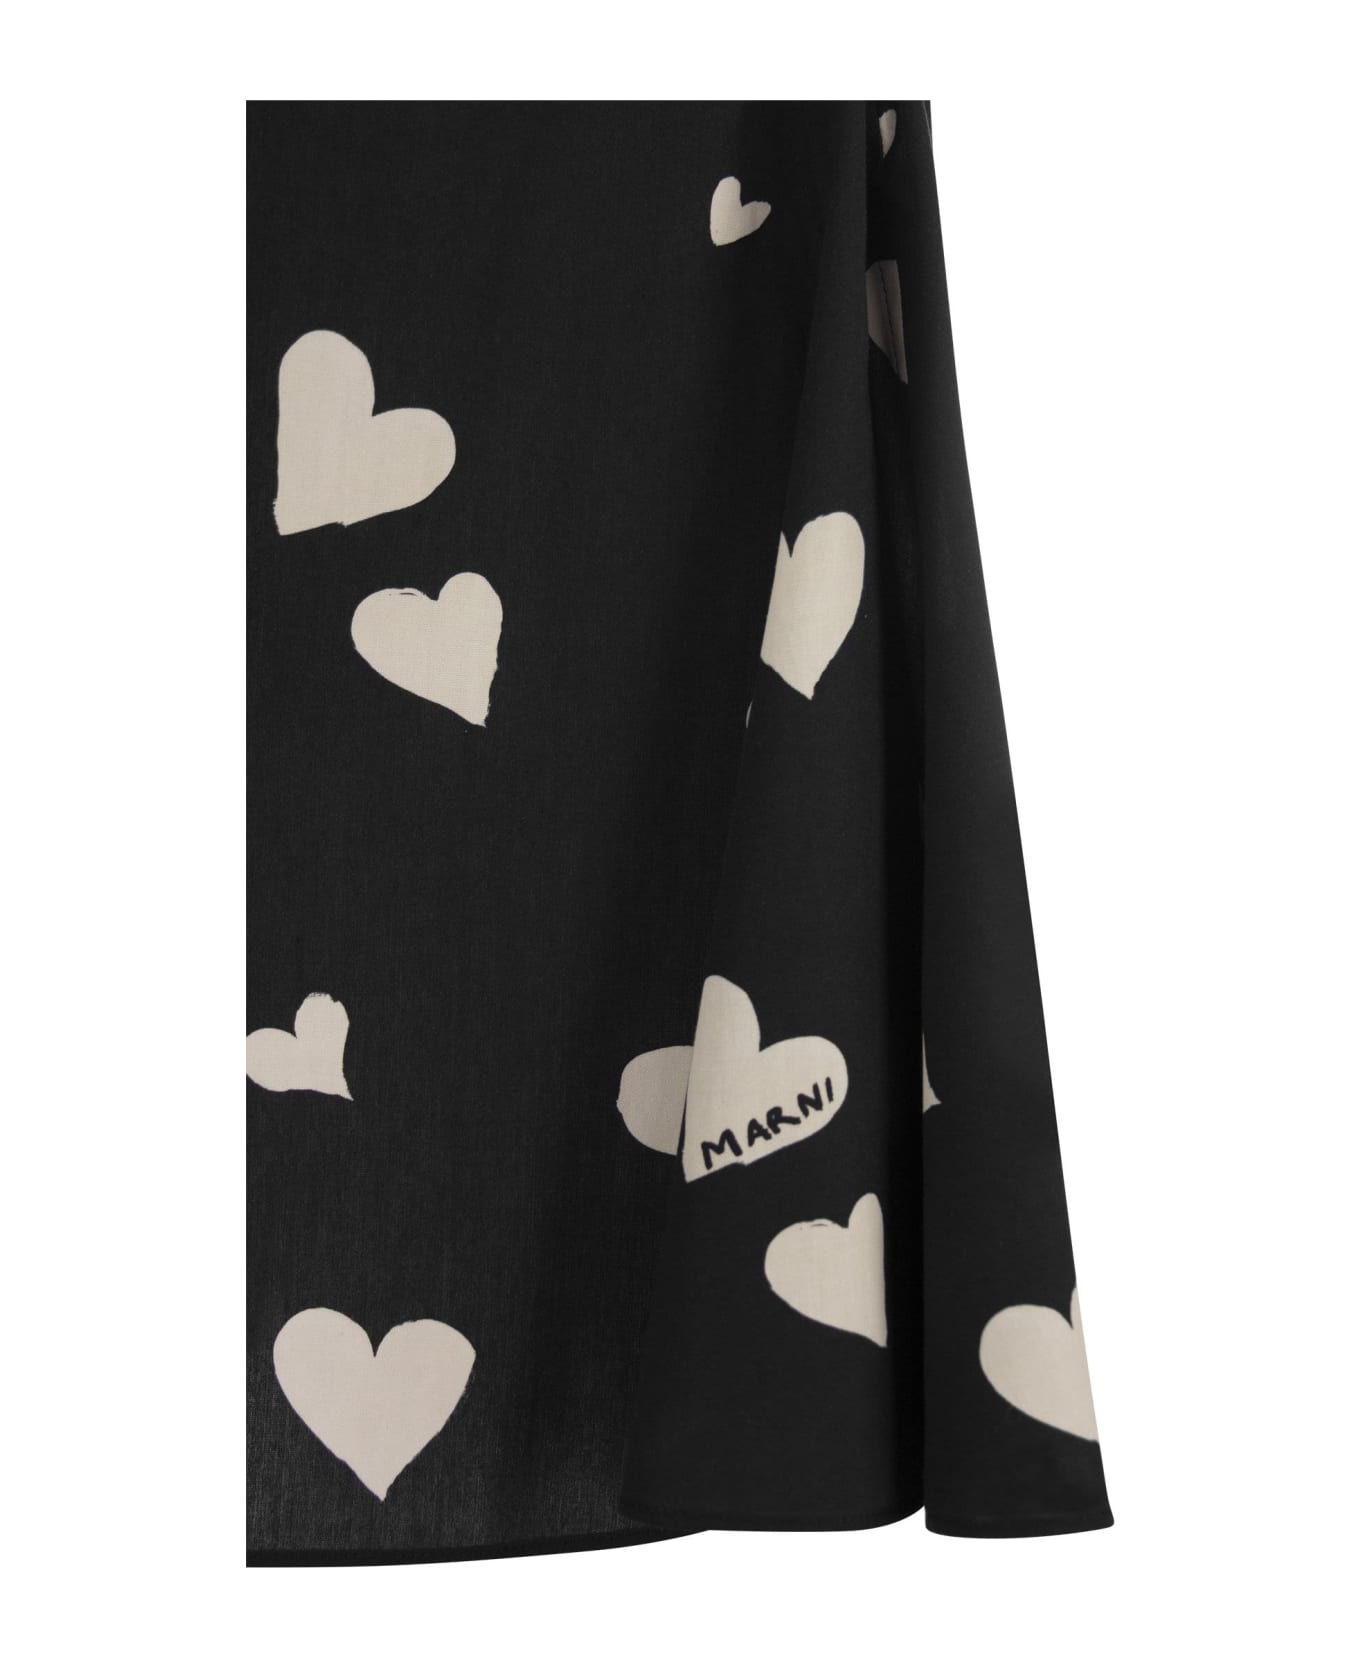 Marni Skirt With Heart Motif - Black